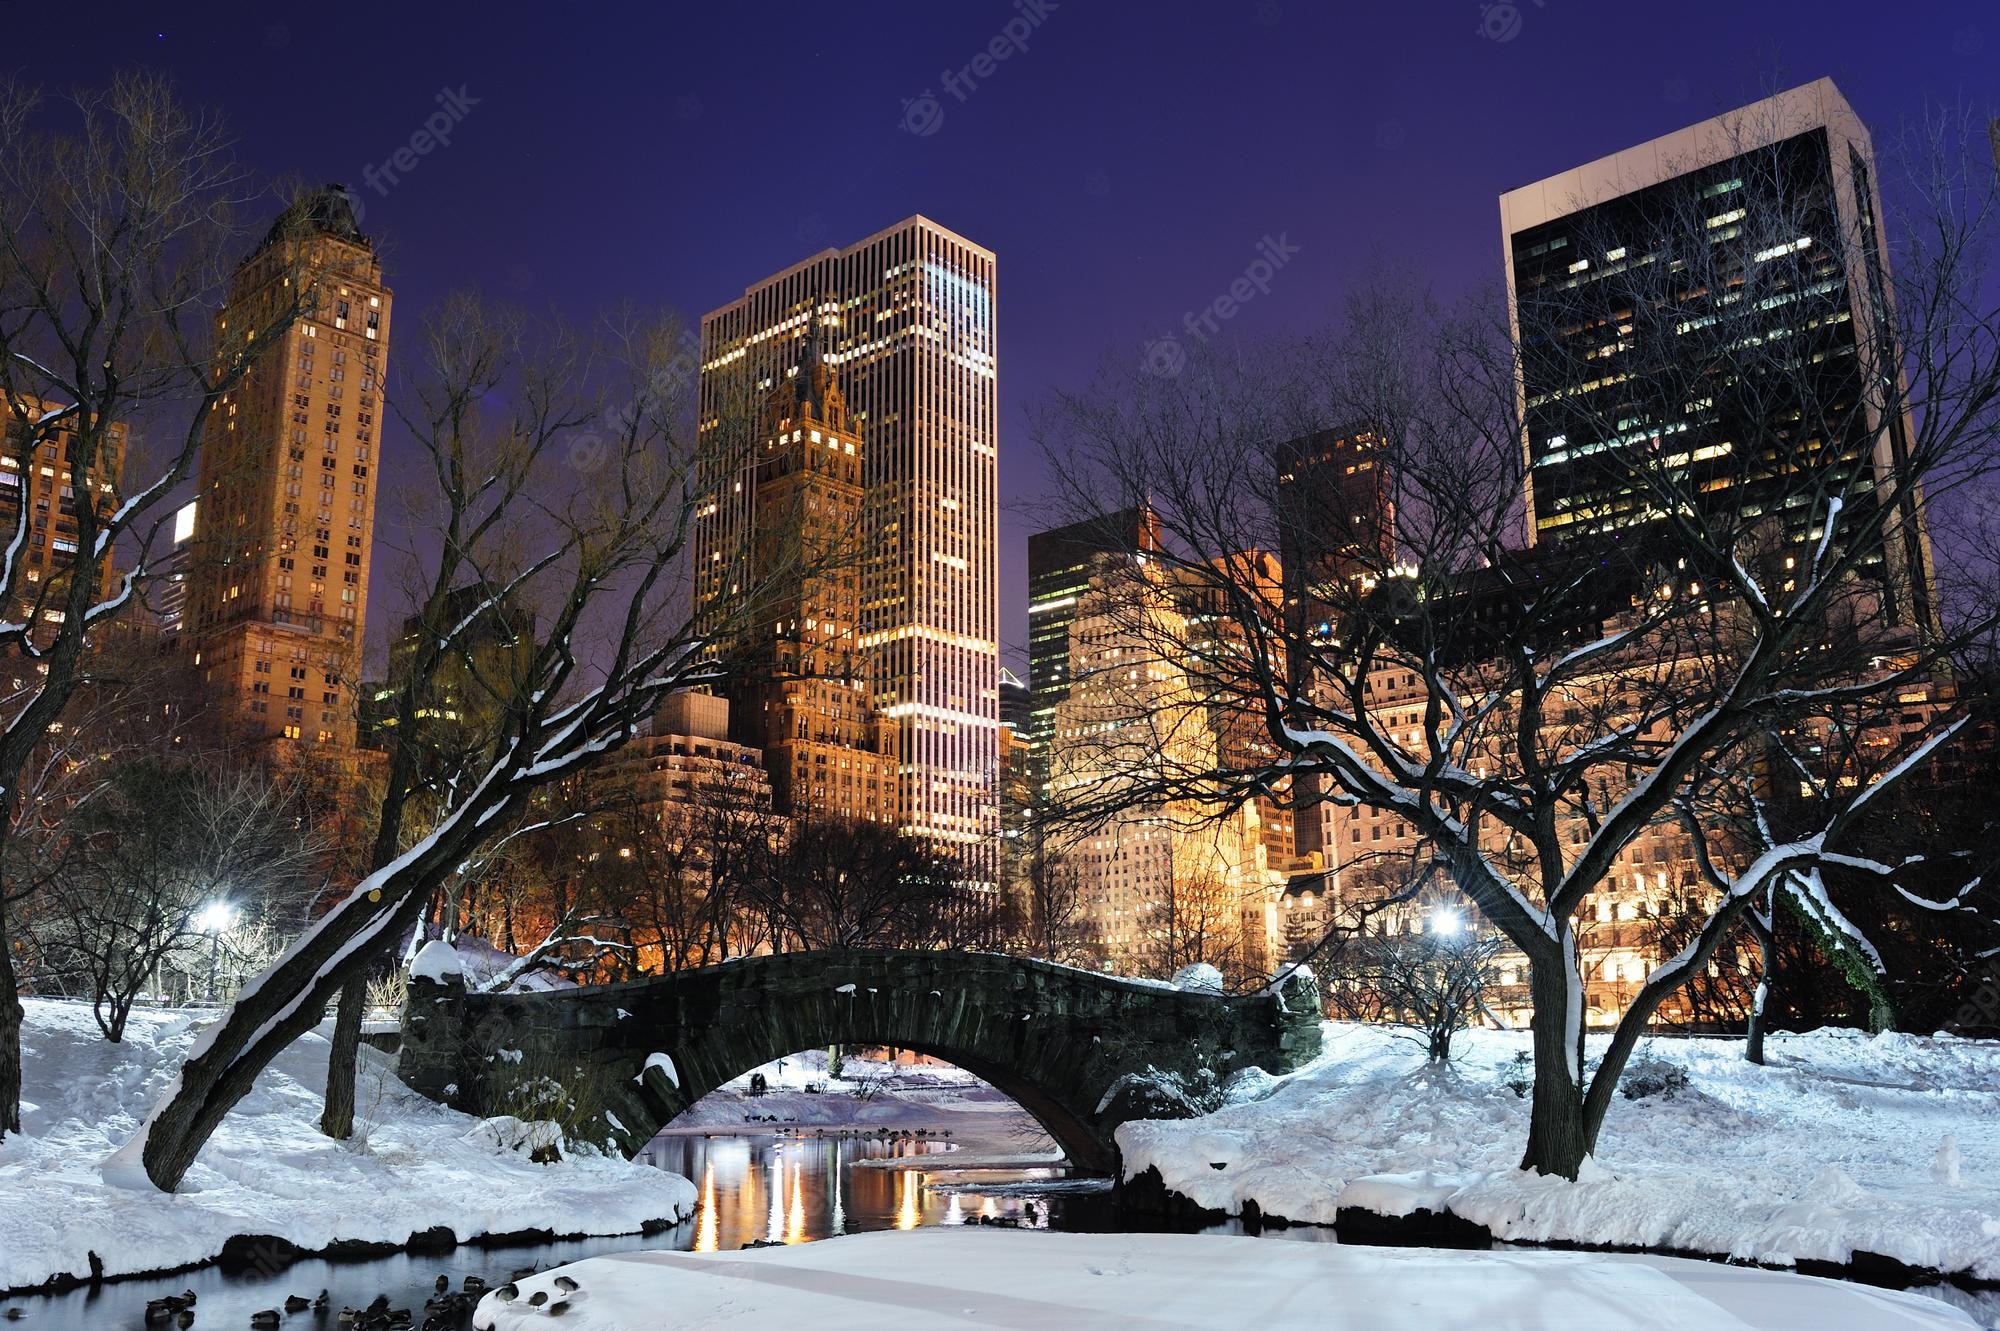 Winter City Image